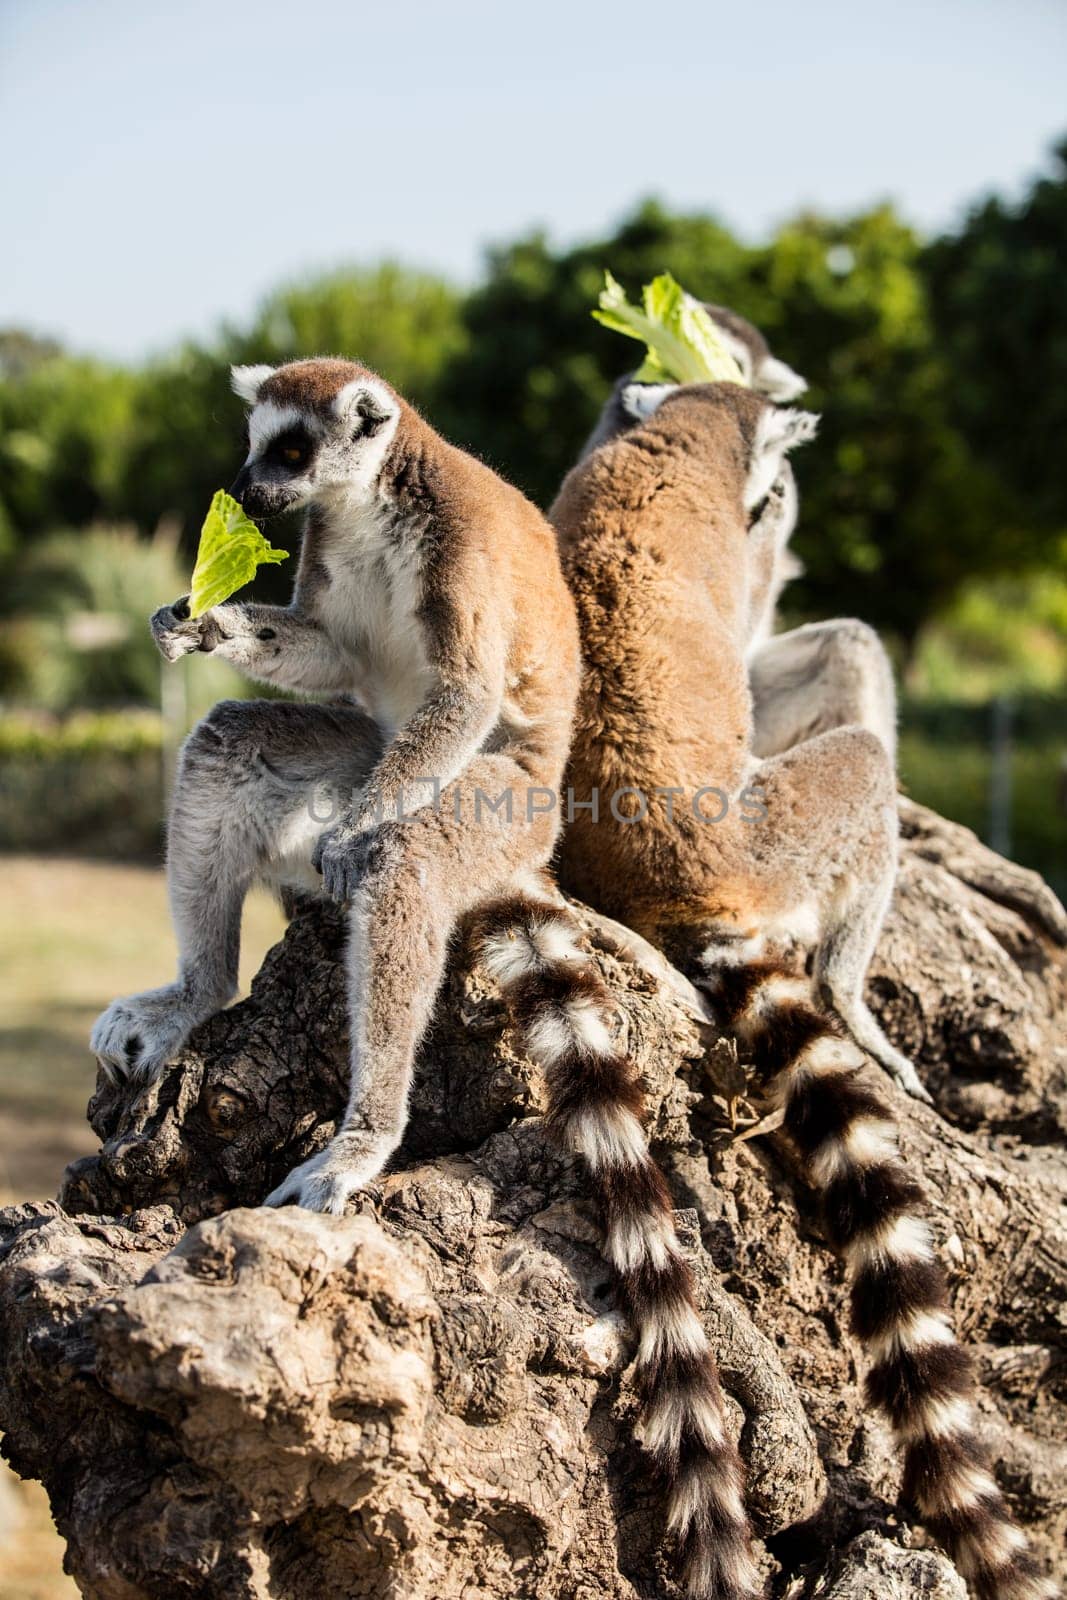 The ring-tailed lemur (Lemur catta) by emirkoo